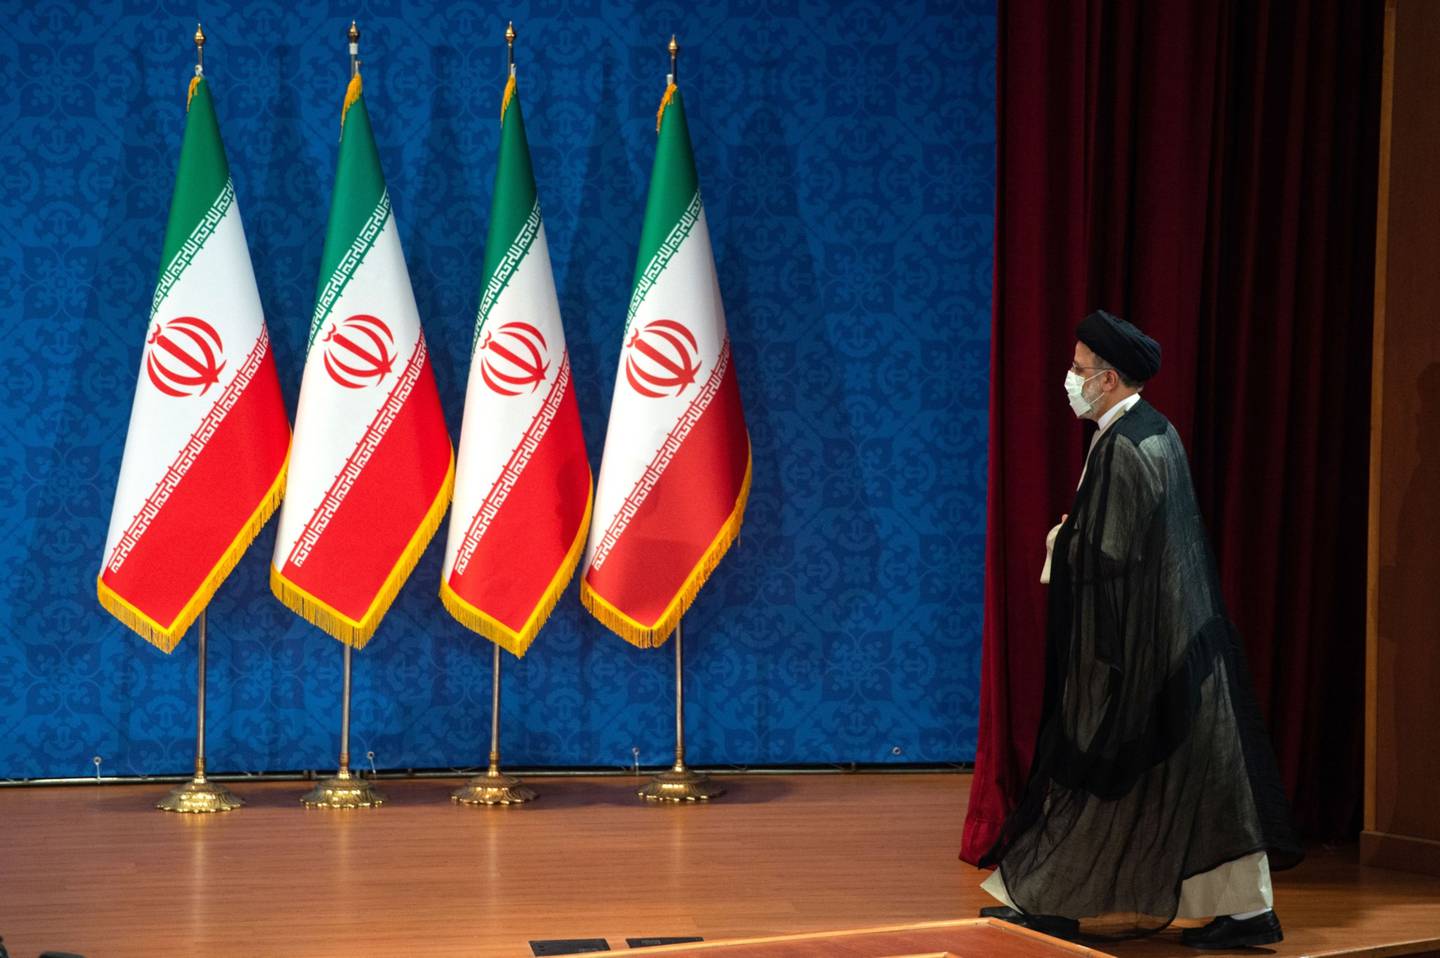 Banderas de Irán.